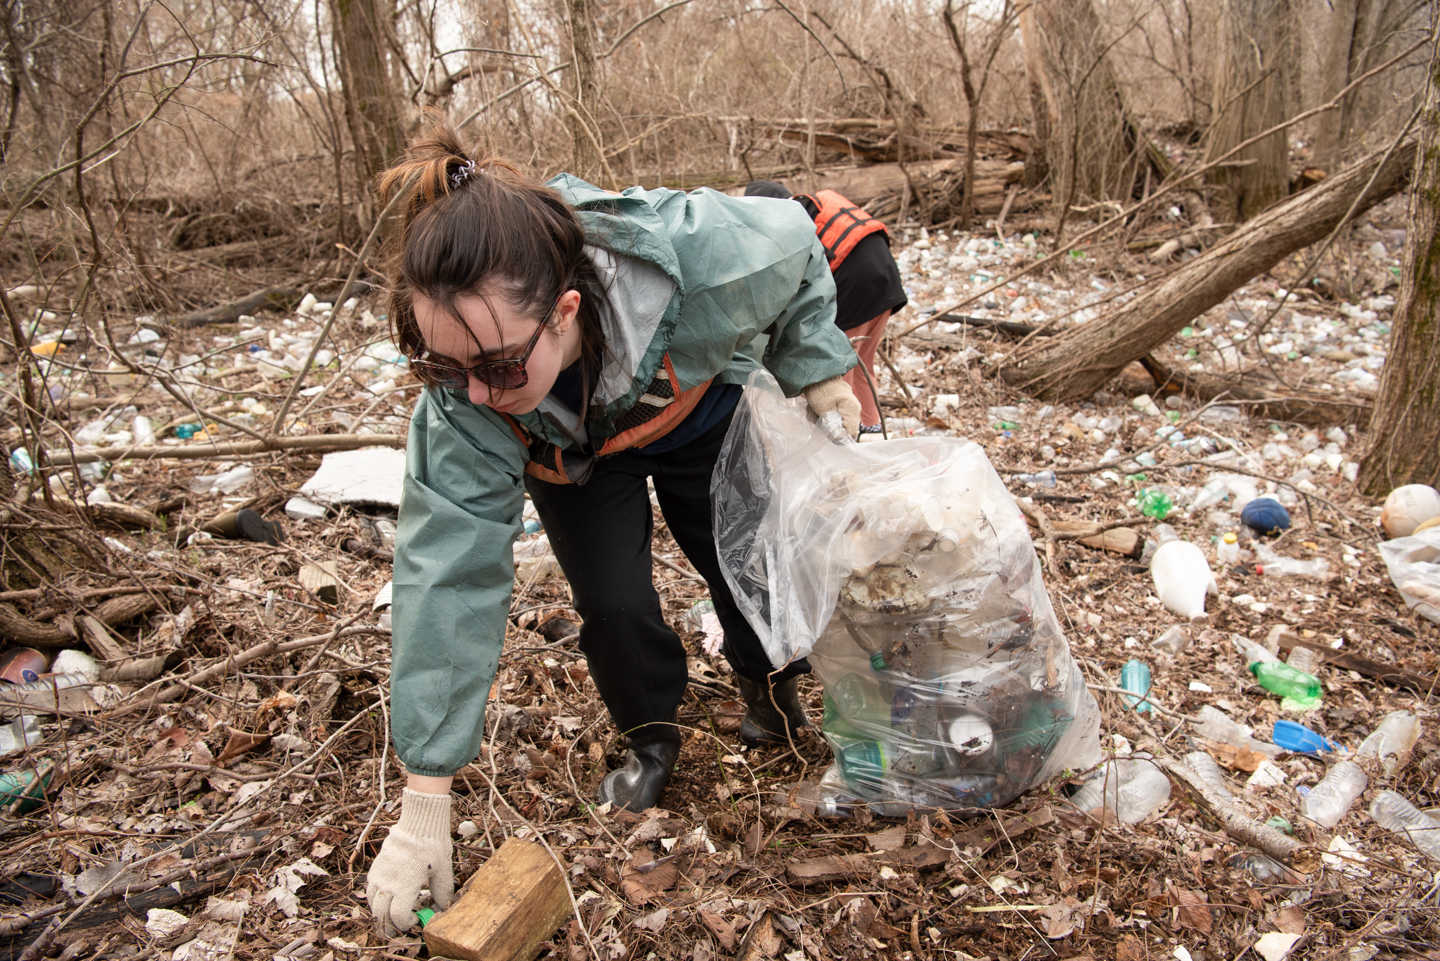 Junior social work major Klaudia Krei picks up plastics along the shoreline of McKellar Lake.